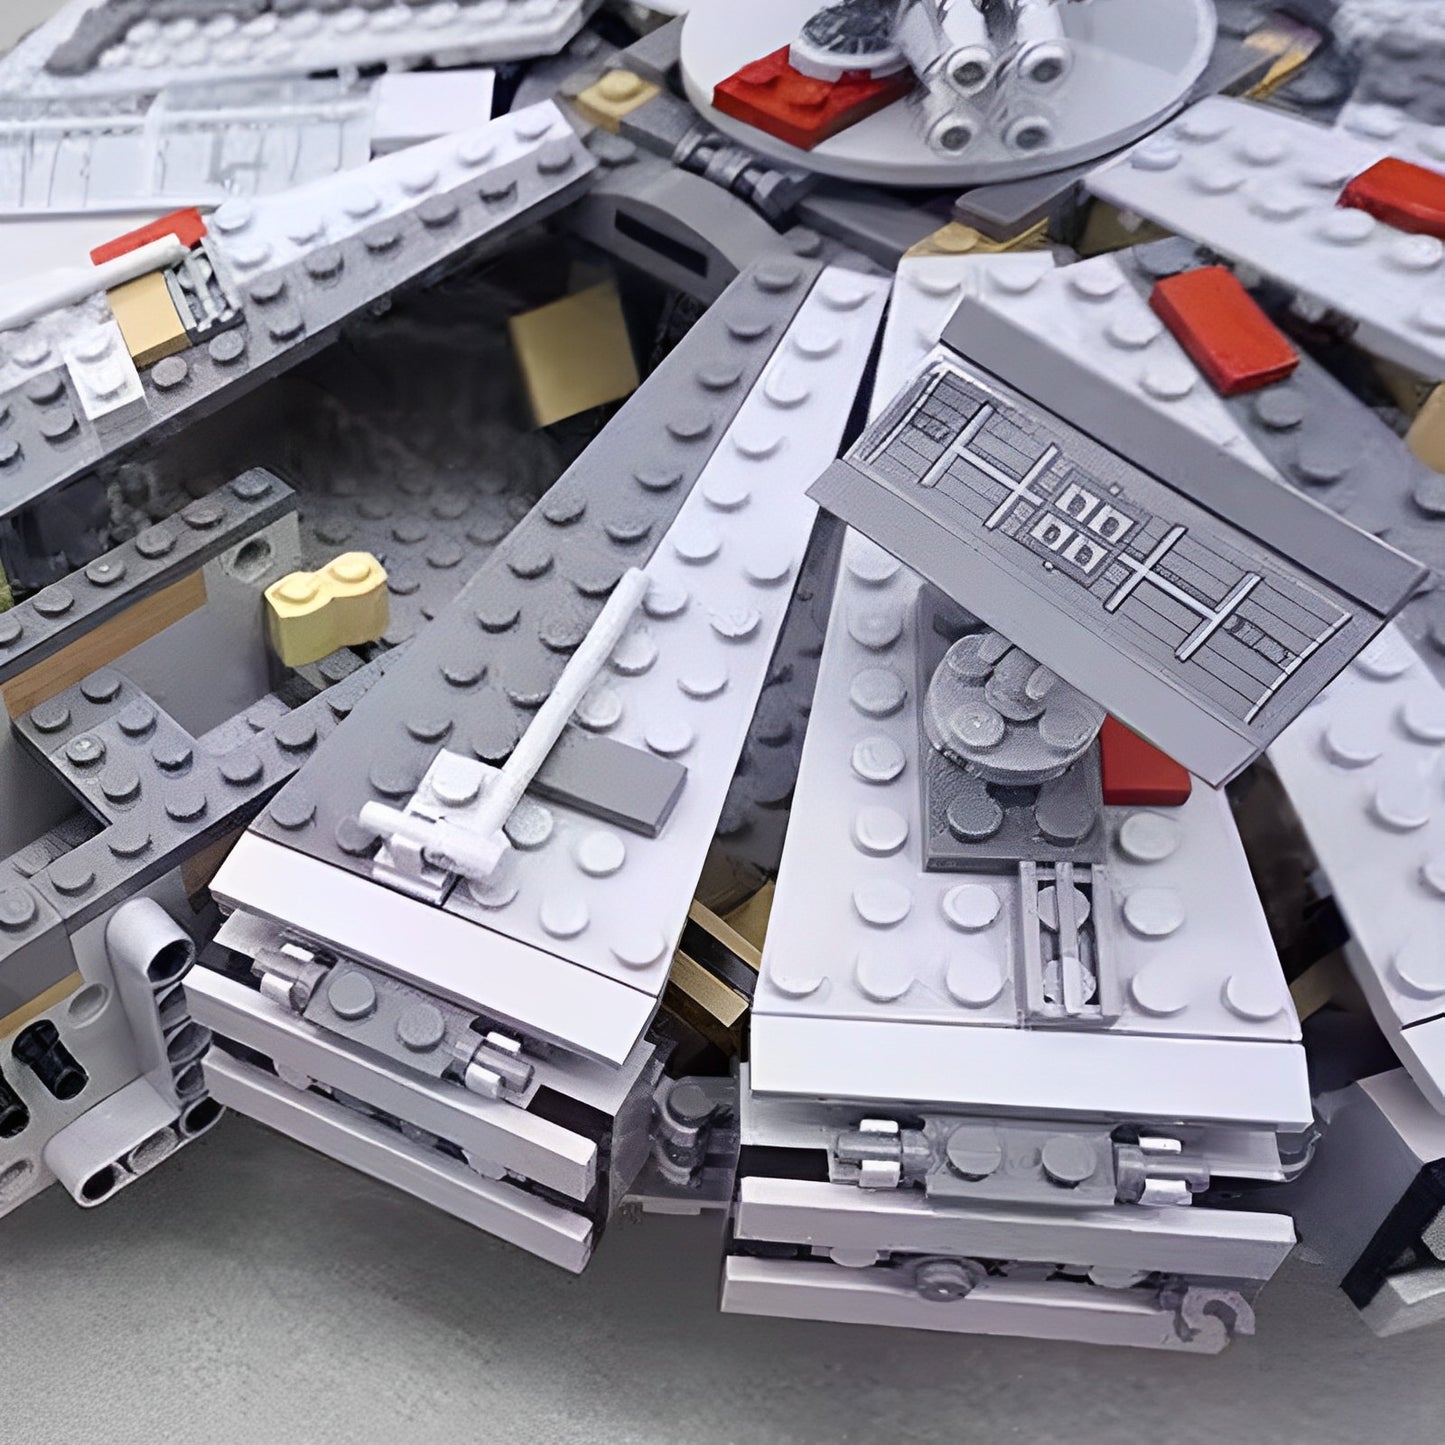 Star Wars Millennium Falcon +1381 pezzi.